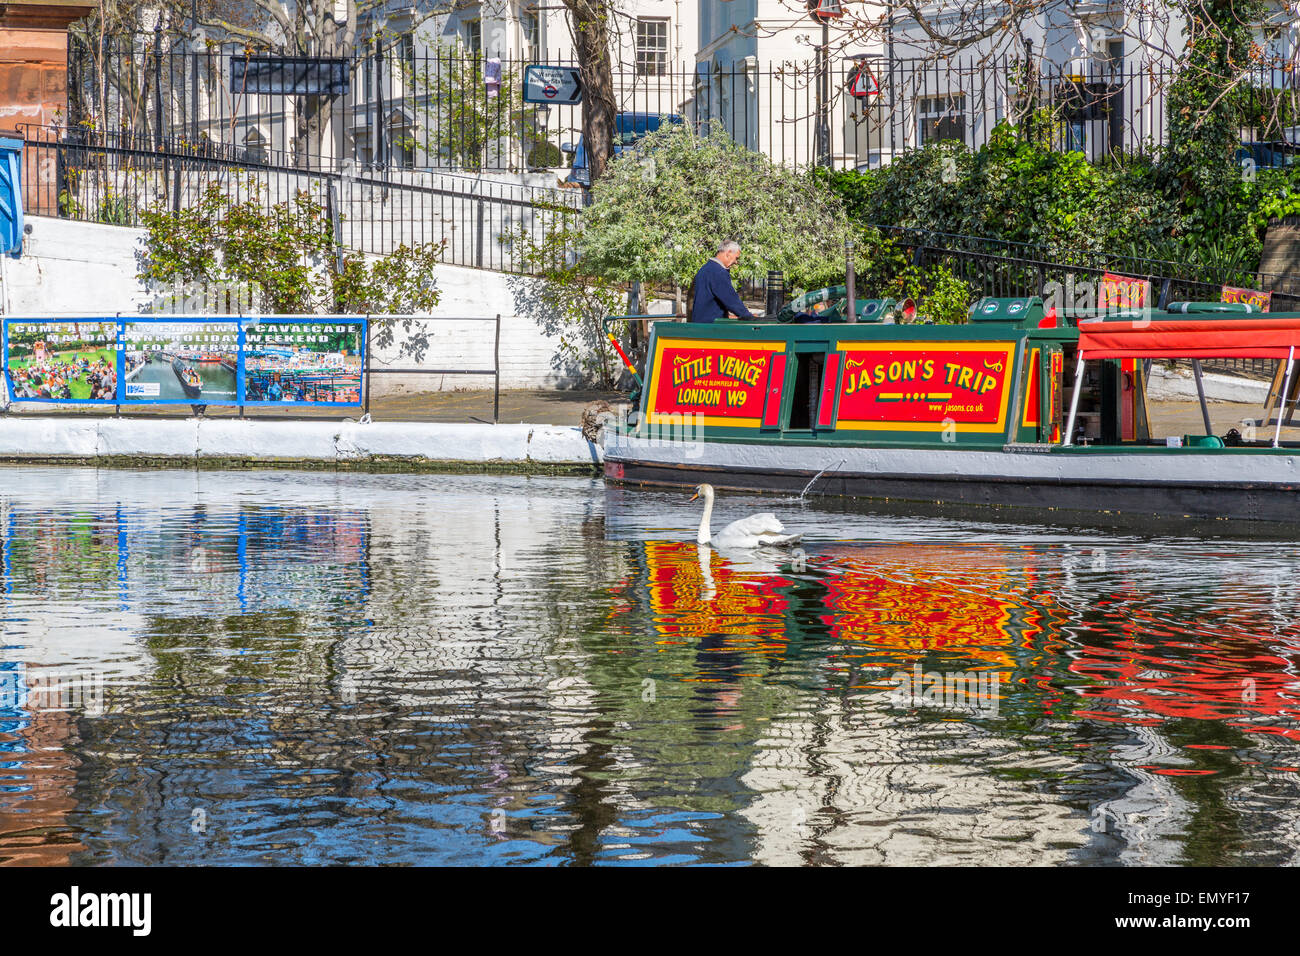 Jason's Canal Trip narrow boat Little Venice London England UK Stock Photo